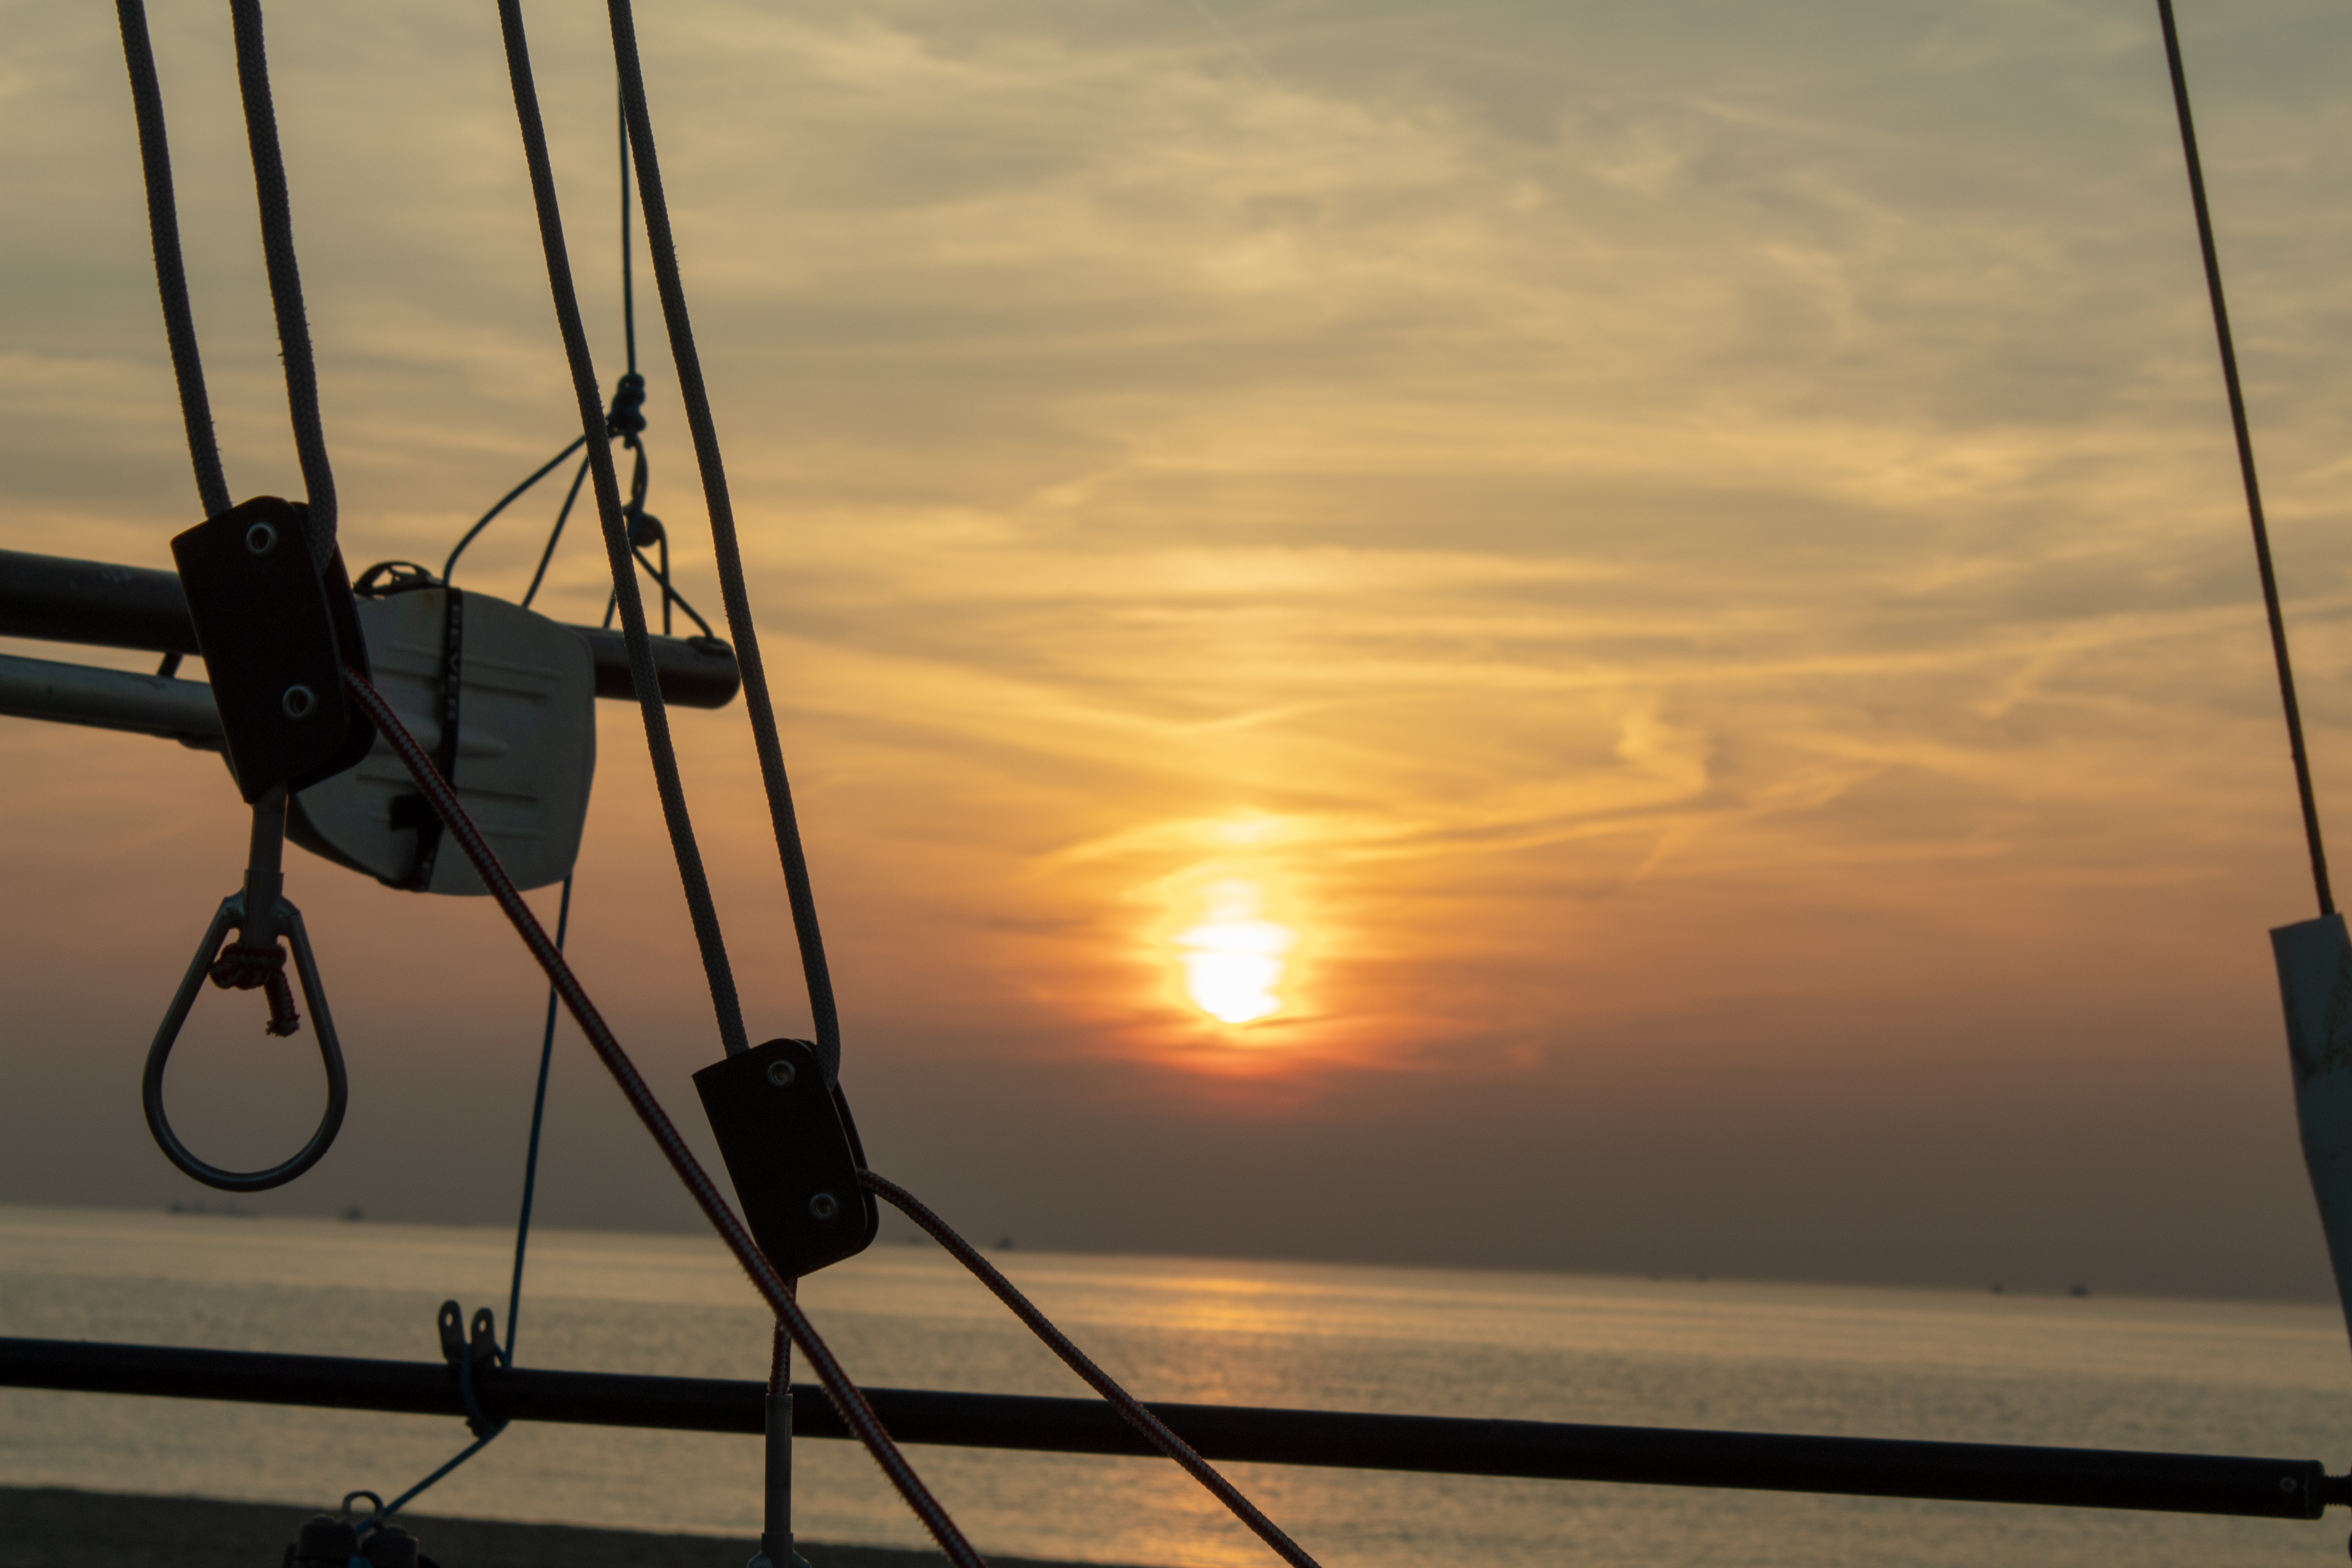 General 5184x3456 Sun sunset beach boat lines sea low light